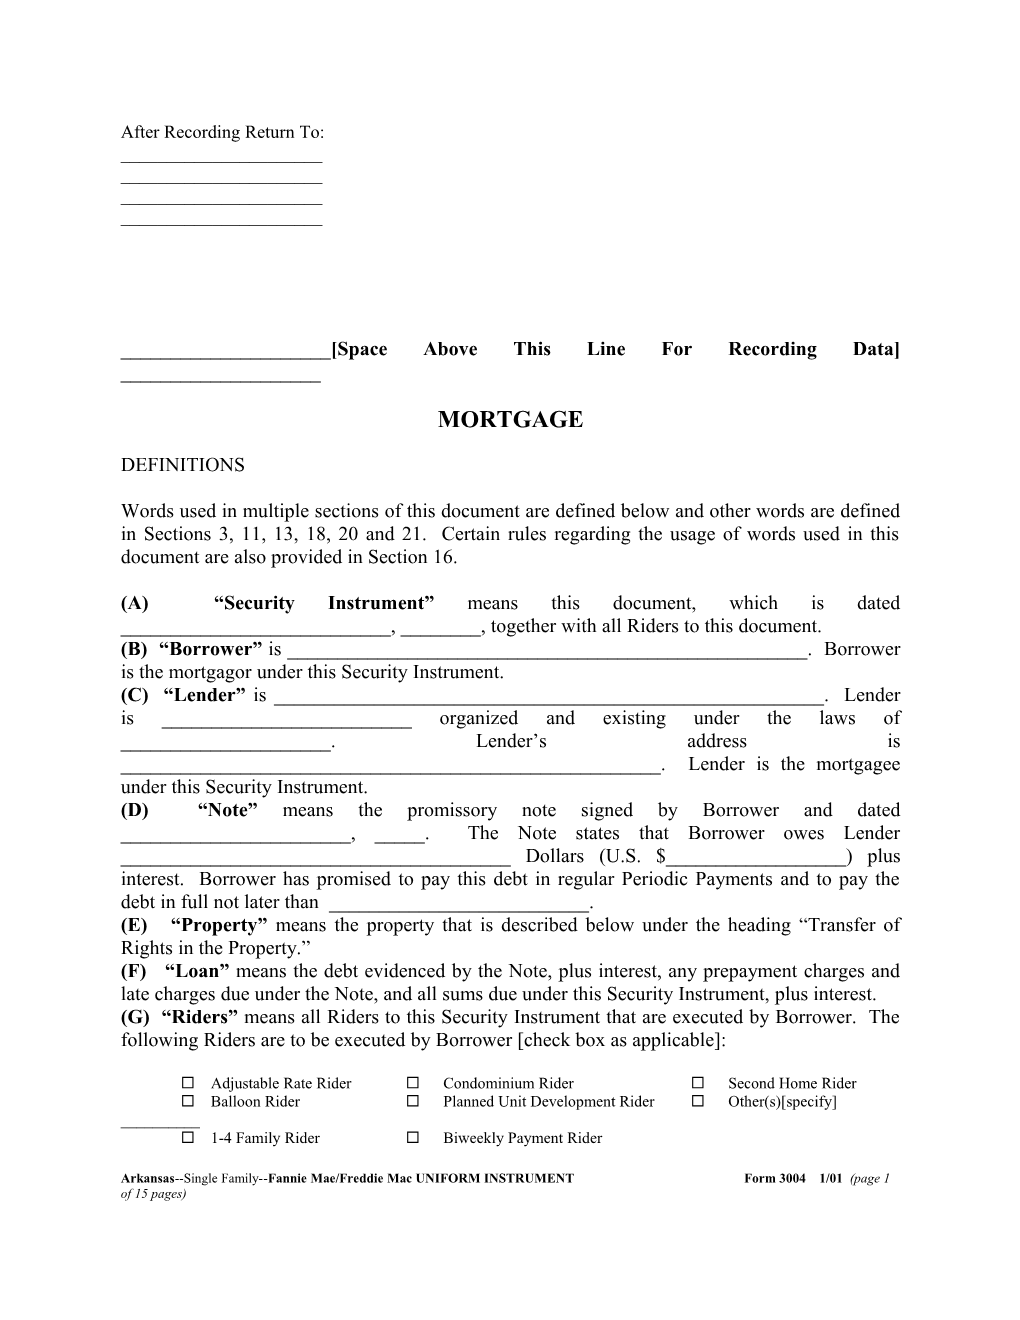 Arkansas Security Instrument (Form 3004): Word